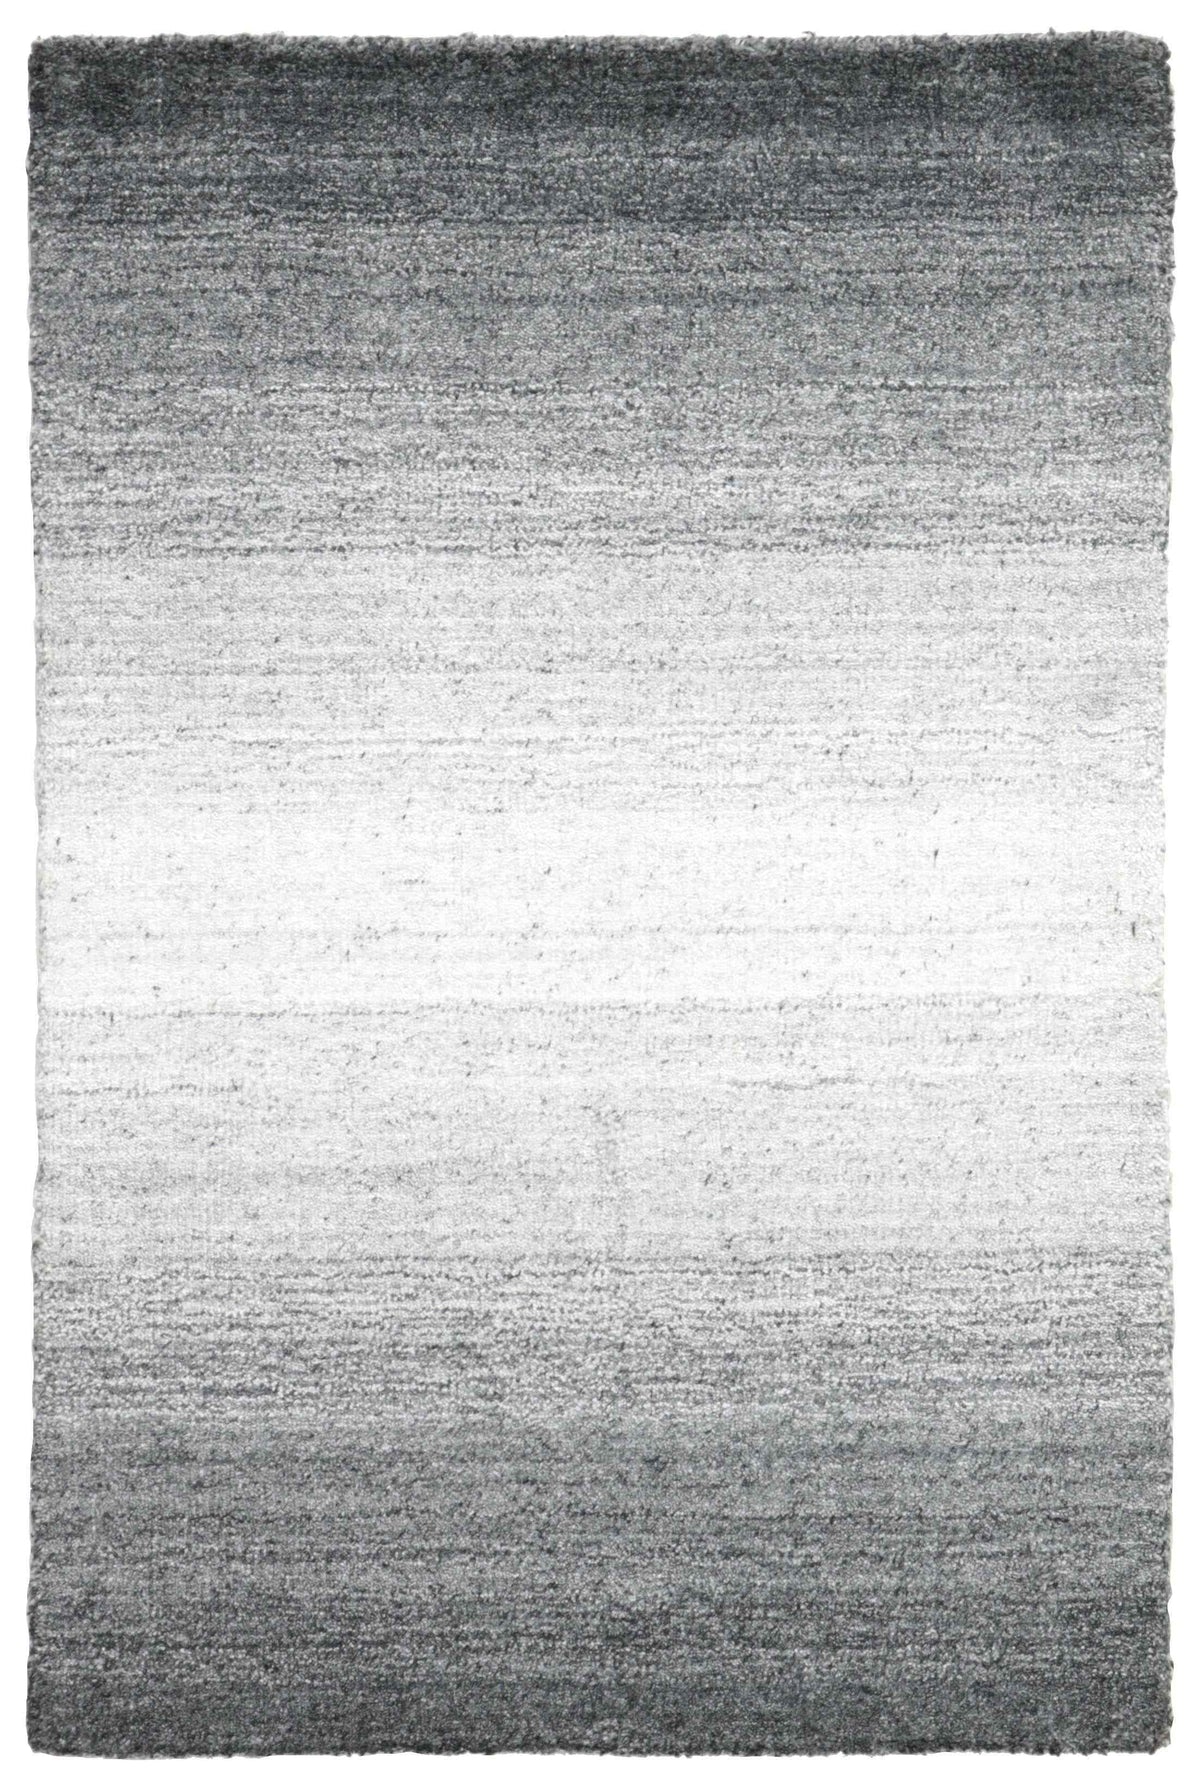 240x170 cm Indian Wool/Viscose Black Rug-Gris, Grey - Rugmaster